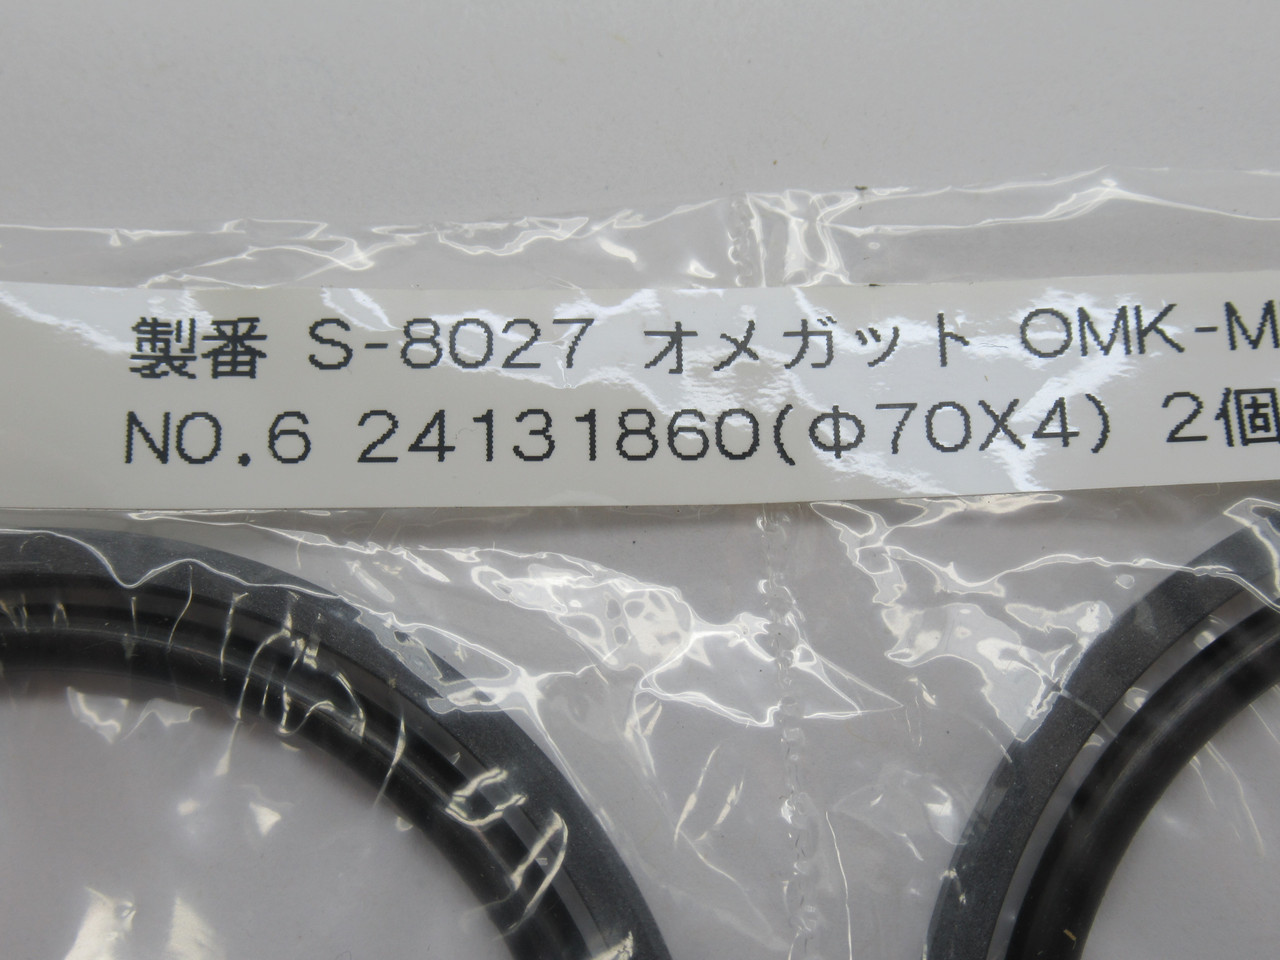 Generic No.6 24131860 OMK-MR Piston Seal 70mm ID x 4mm W *2-Pack* NWB